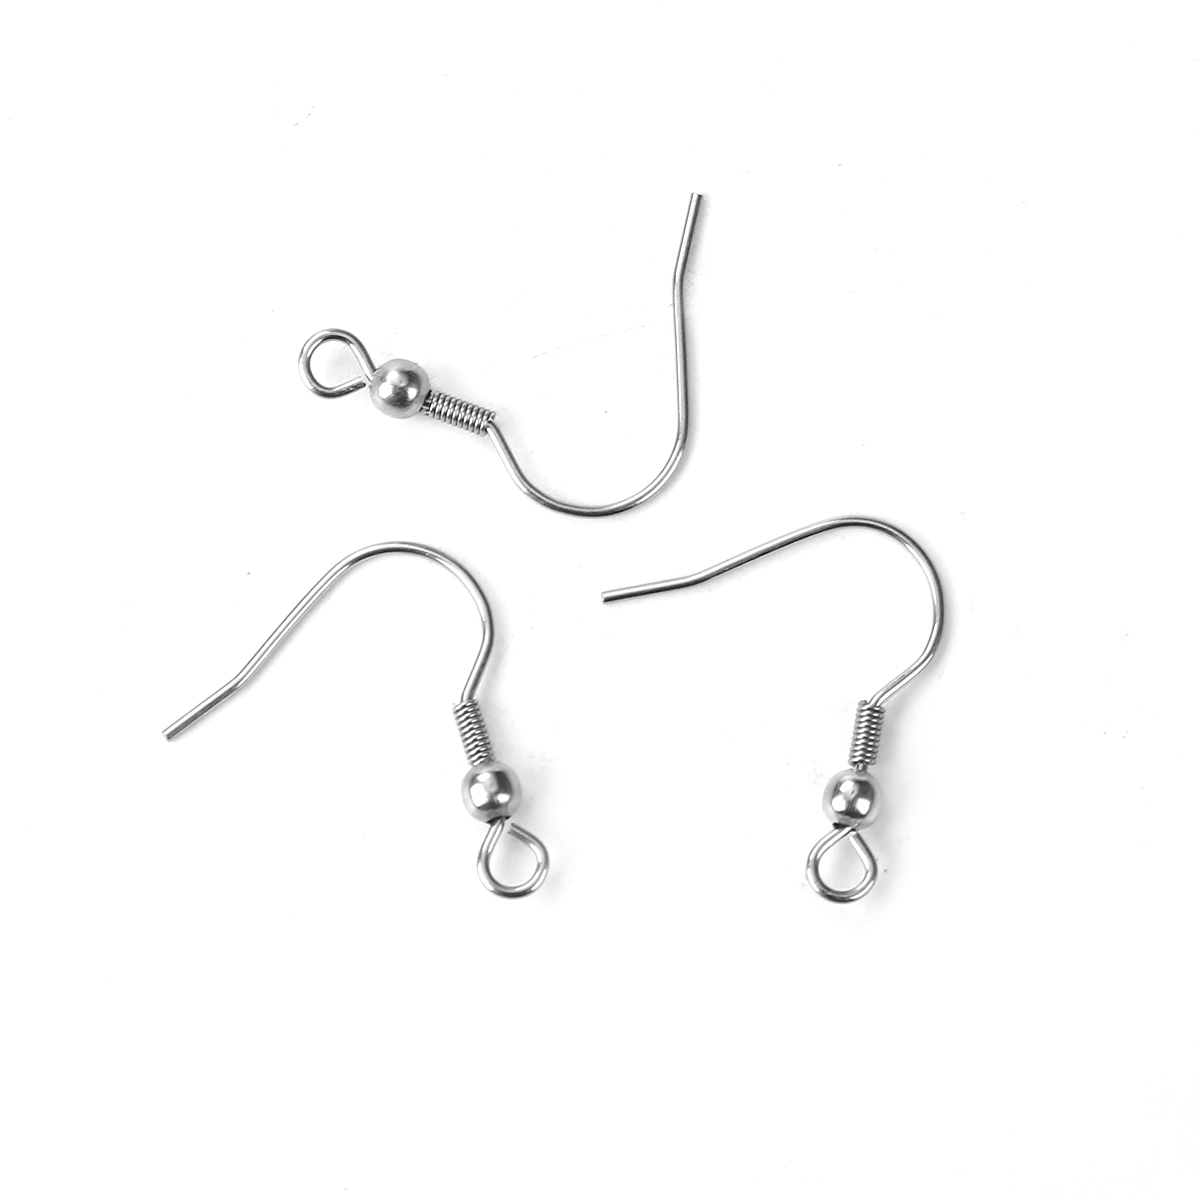 Picture of Stainless Steel Ear Wire Hooks Earring Findings Silver Tone W/ Loop 21mm( 7/8") x 19mm( 6/8"), Post/ Wire Size: (21 gauge), 50 PCs